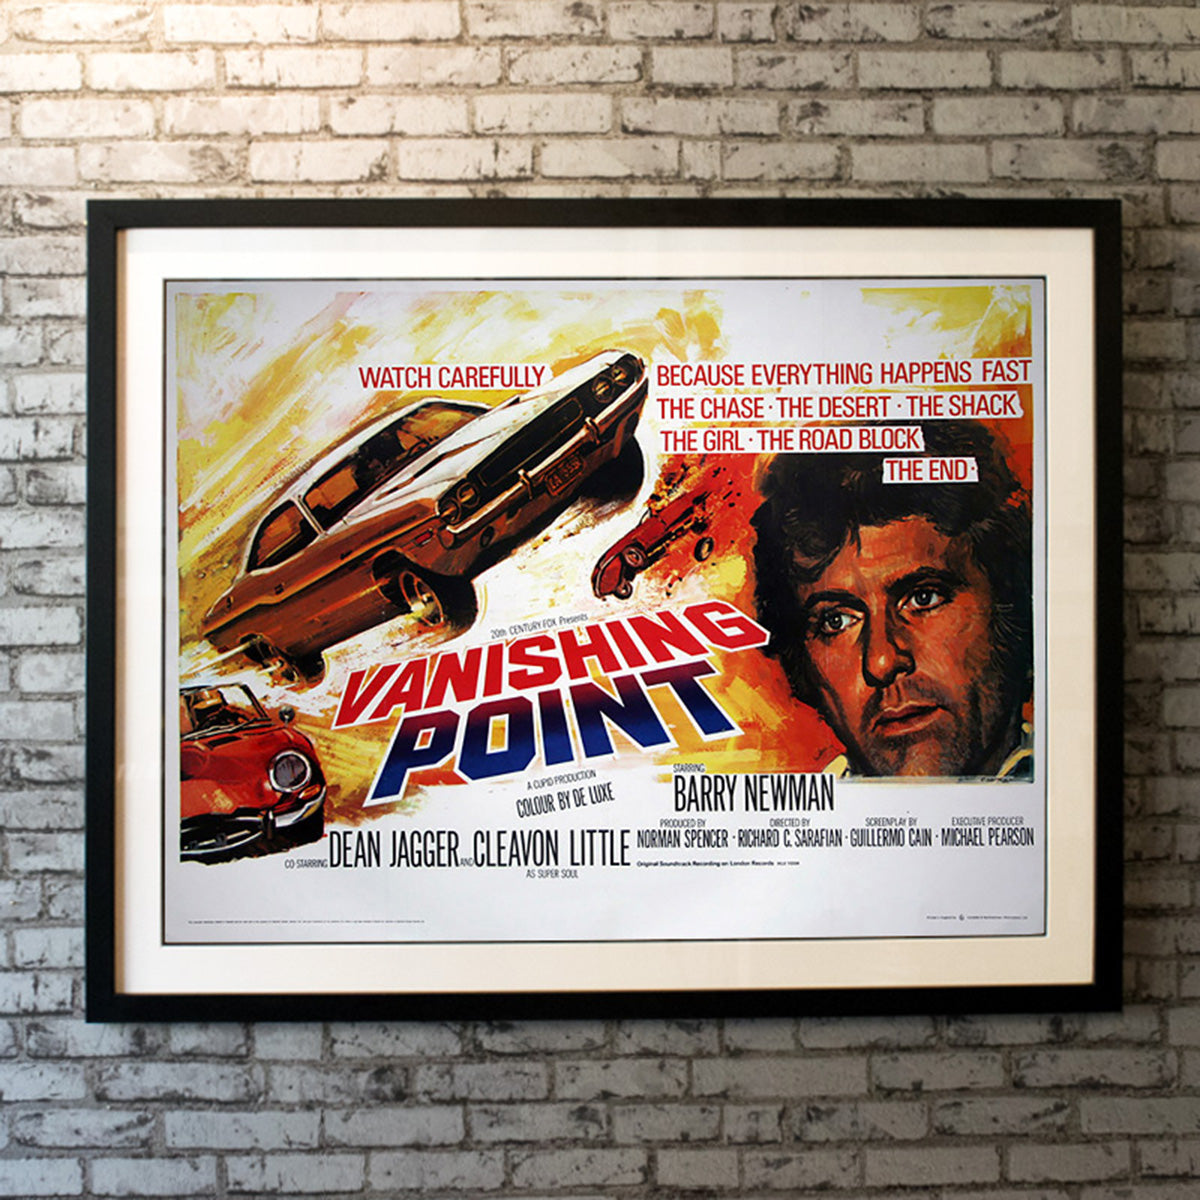 Original Movie Poster of Vanishing Point (1971)